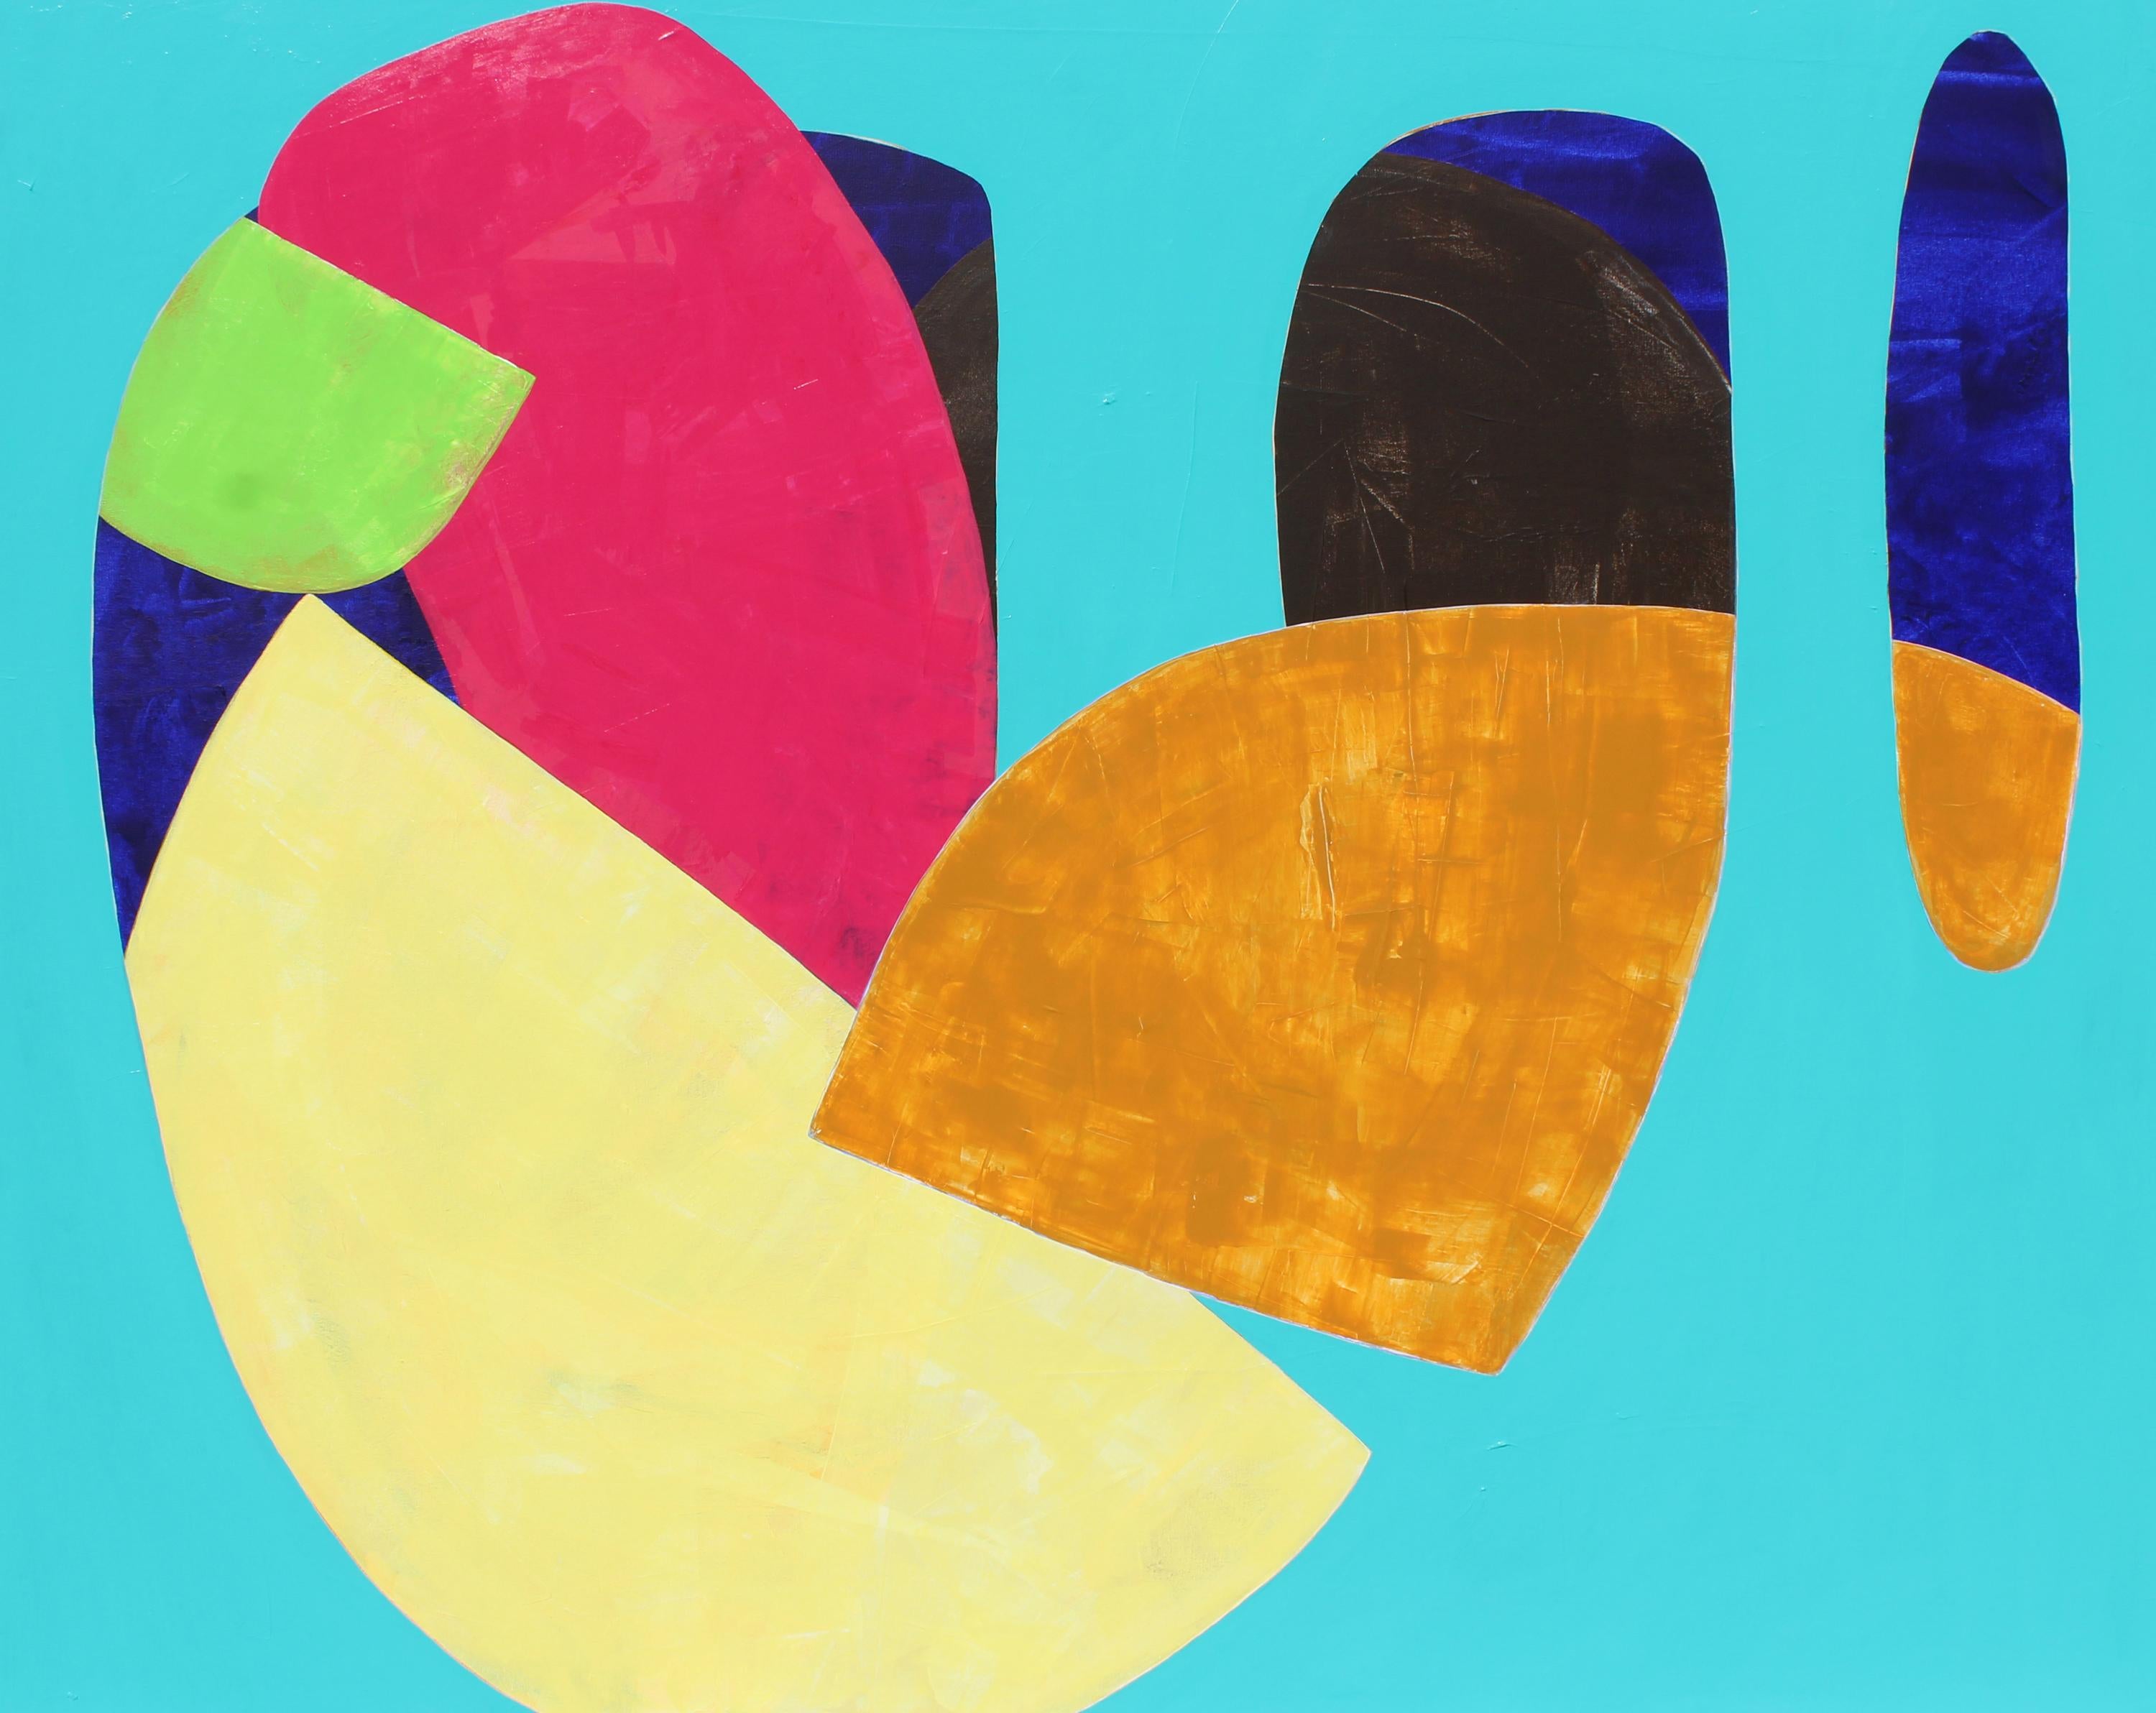 Laura Dargan Abstract Painting - "Deep" - Colorful Non-Objective Painting - Bold Shapes - Sonia Delaunay